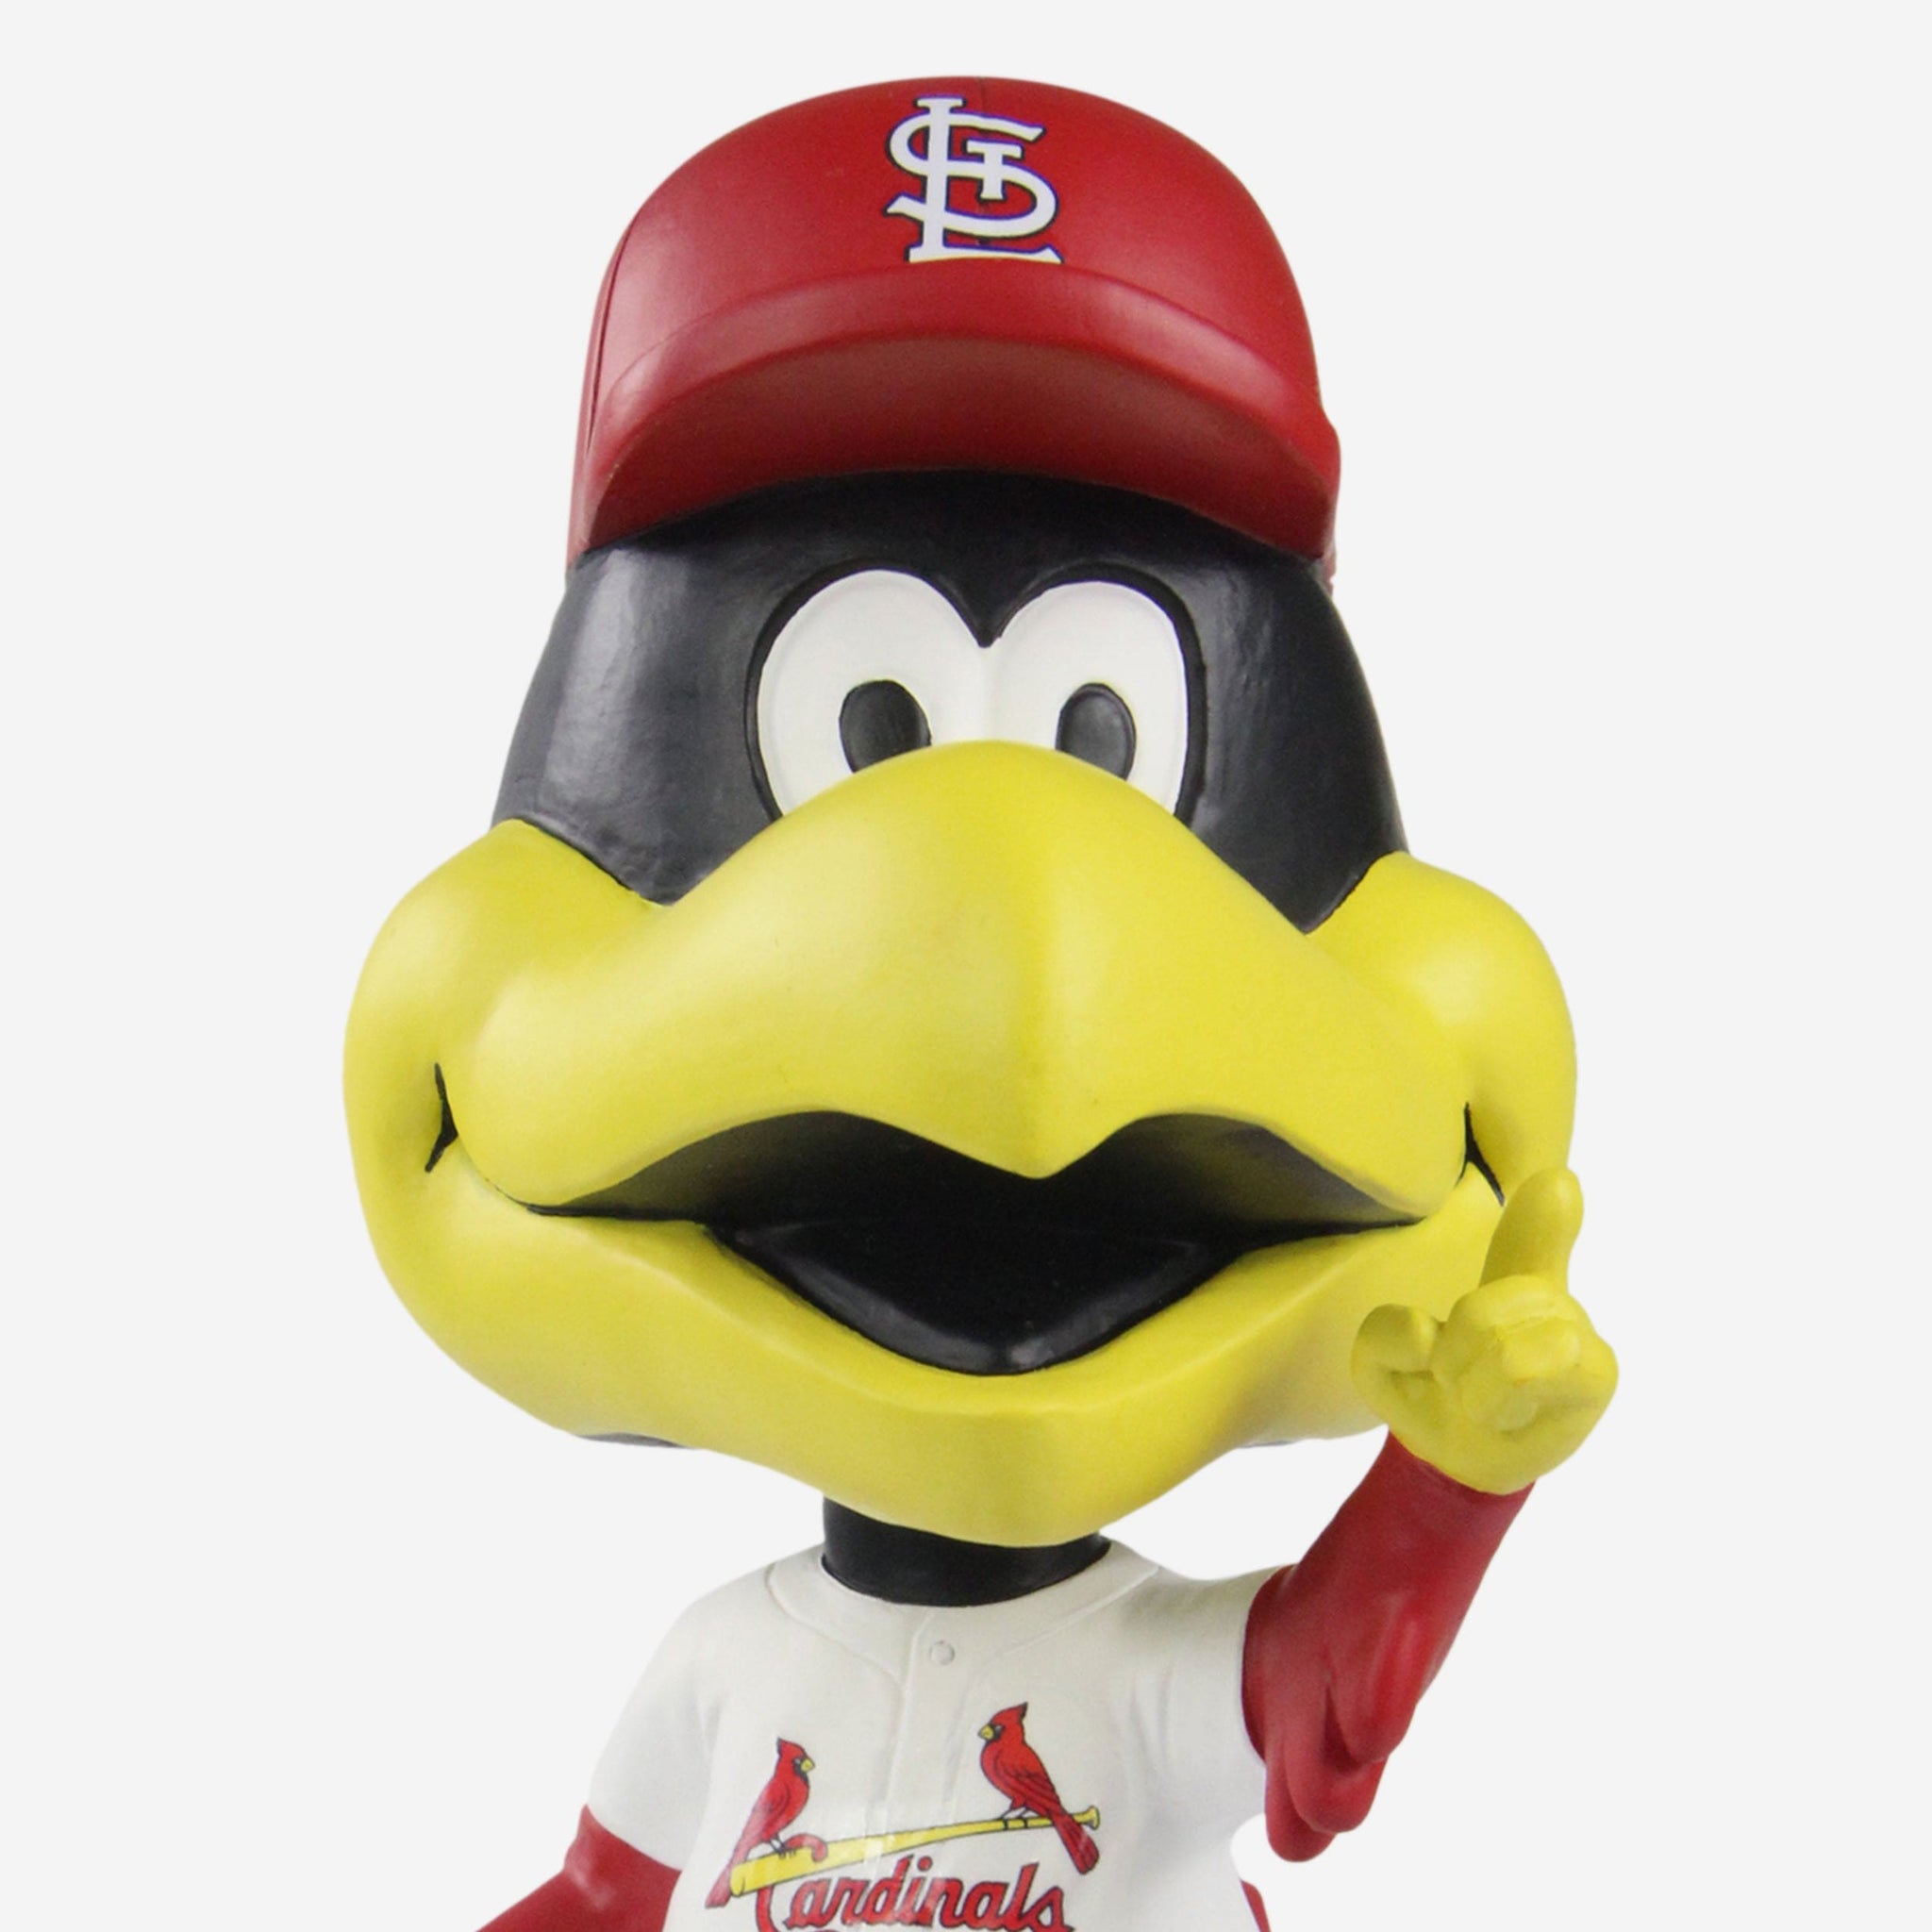 St. Louis Cardinals FOCO Showstomperz Mascot Bobblehead